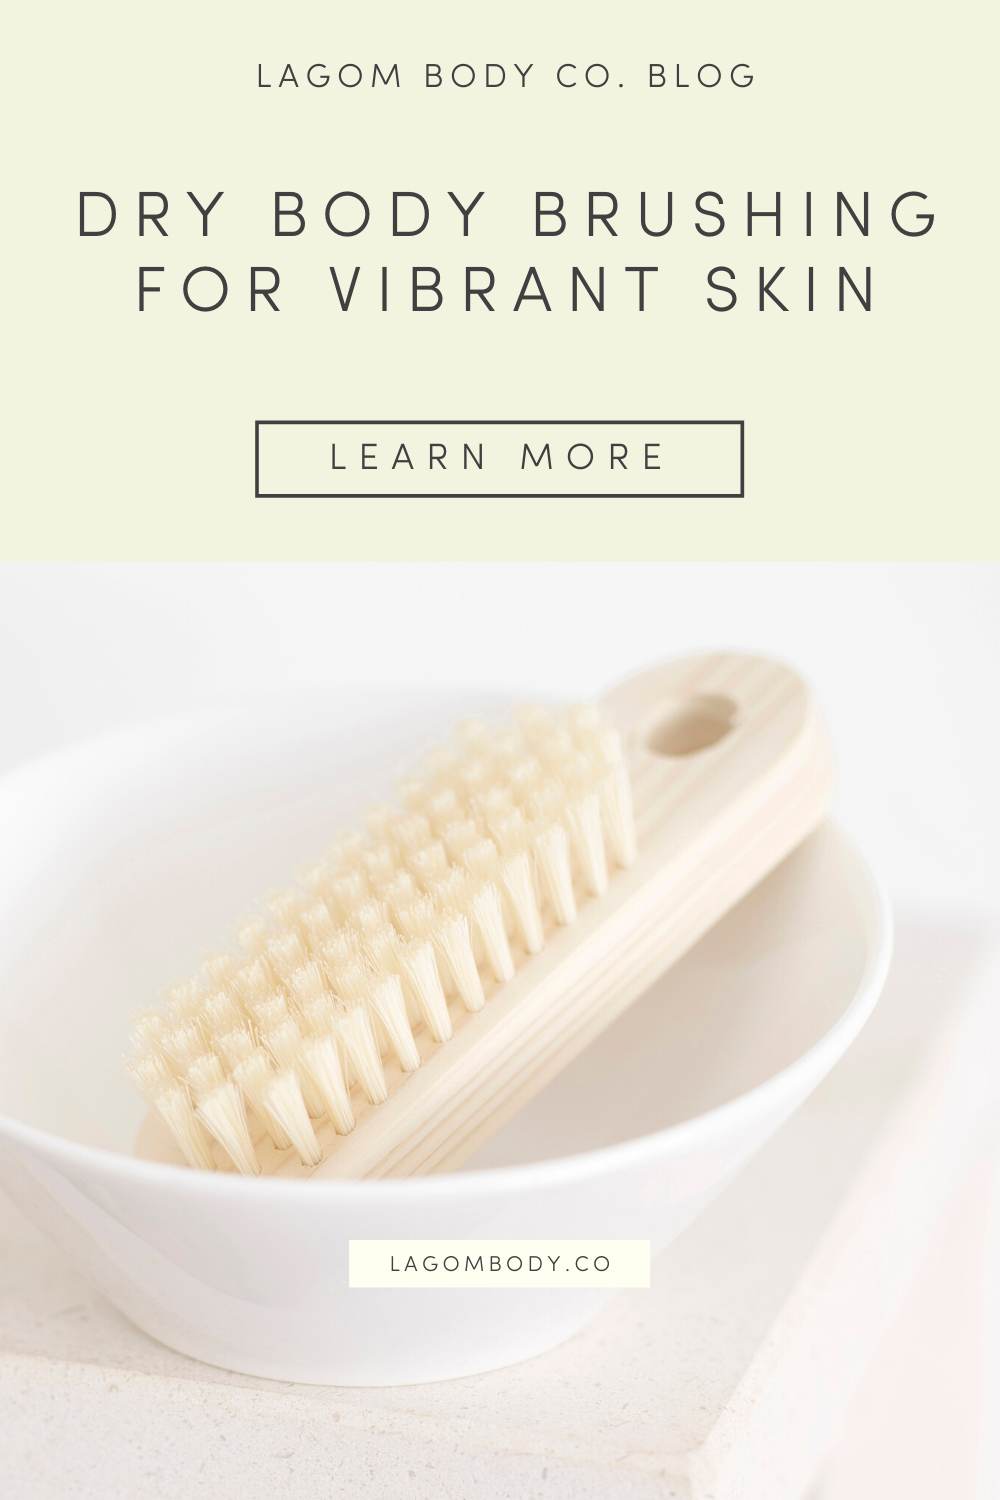 Dry Body Brushing For Vibrant Skin by Lagom Body Co. Promo